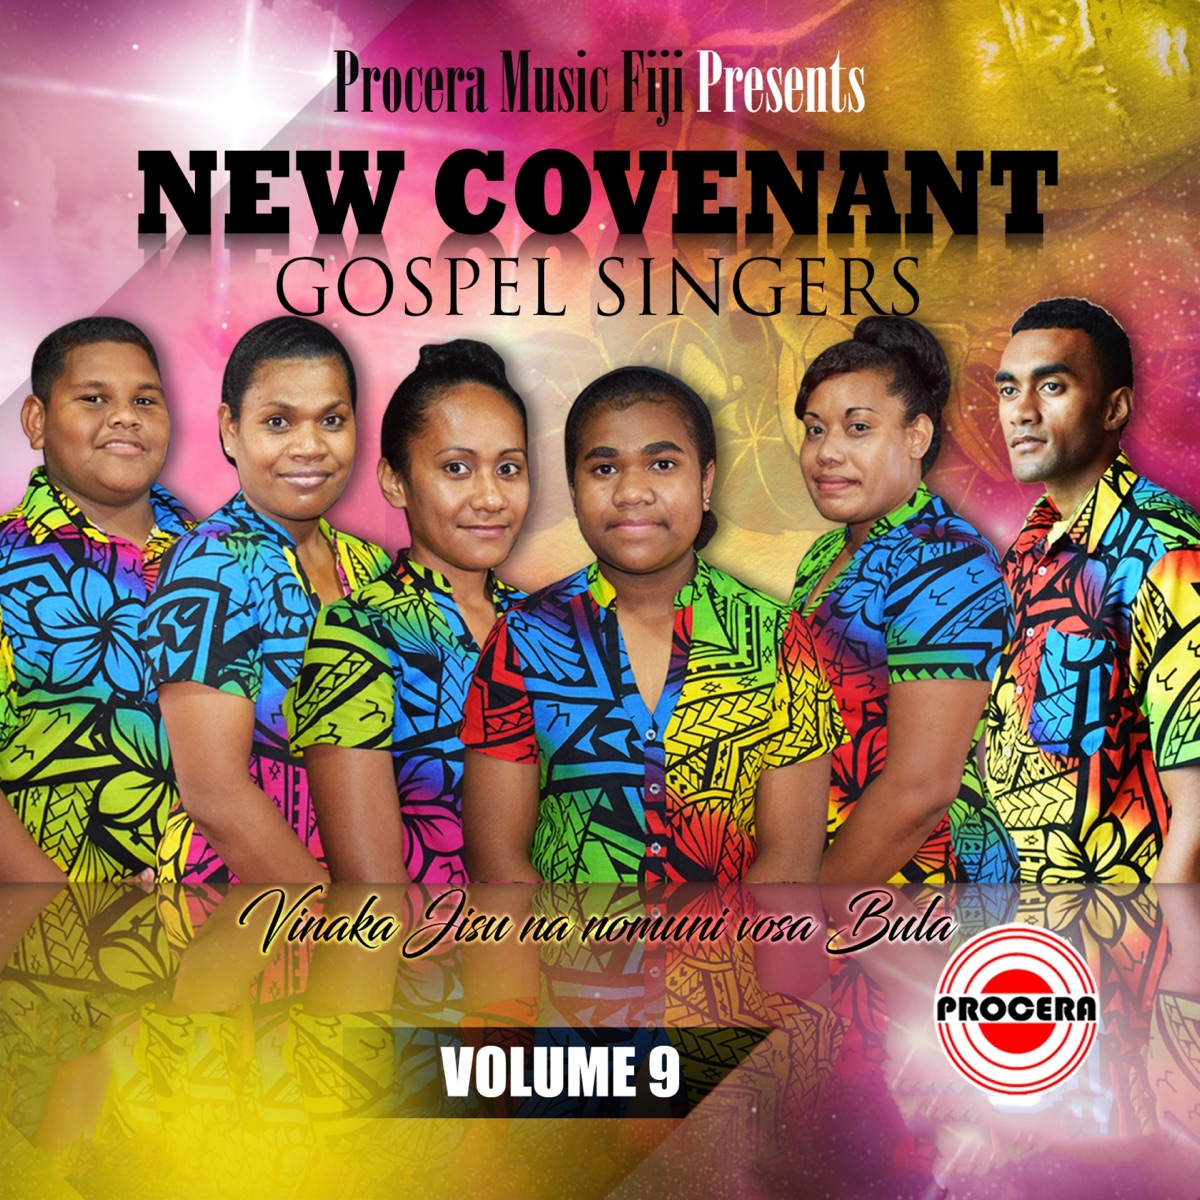 New Covenant Gospel Singers, Vol. 7 by New Covenant on Apple Music